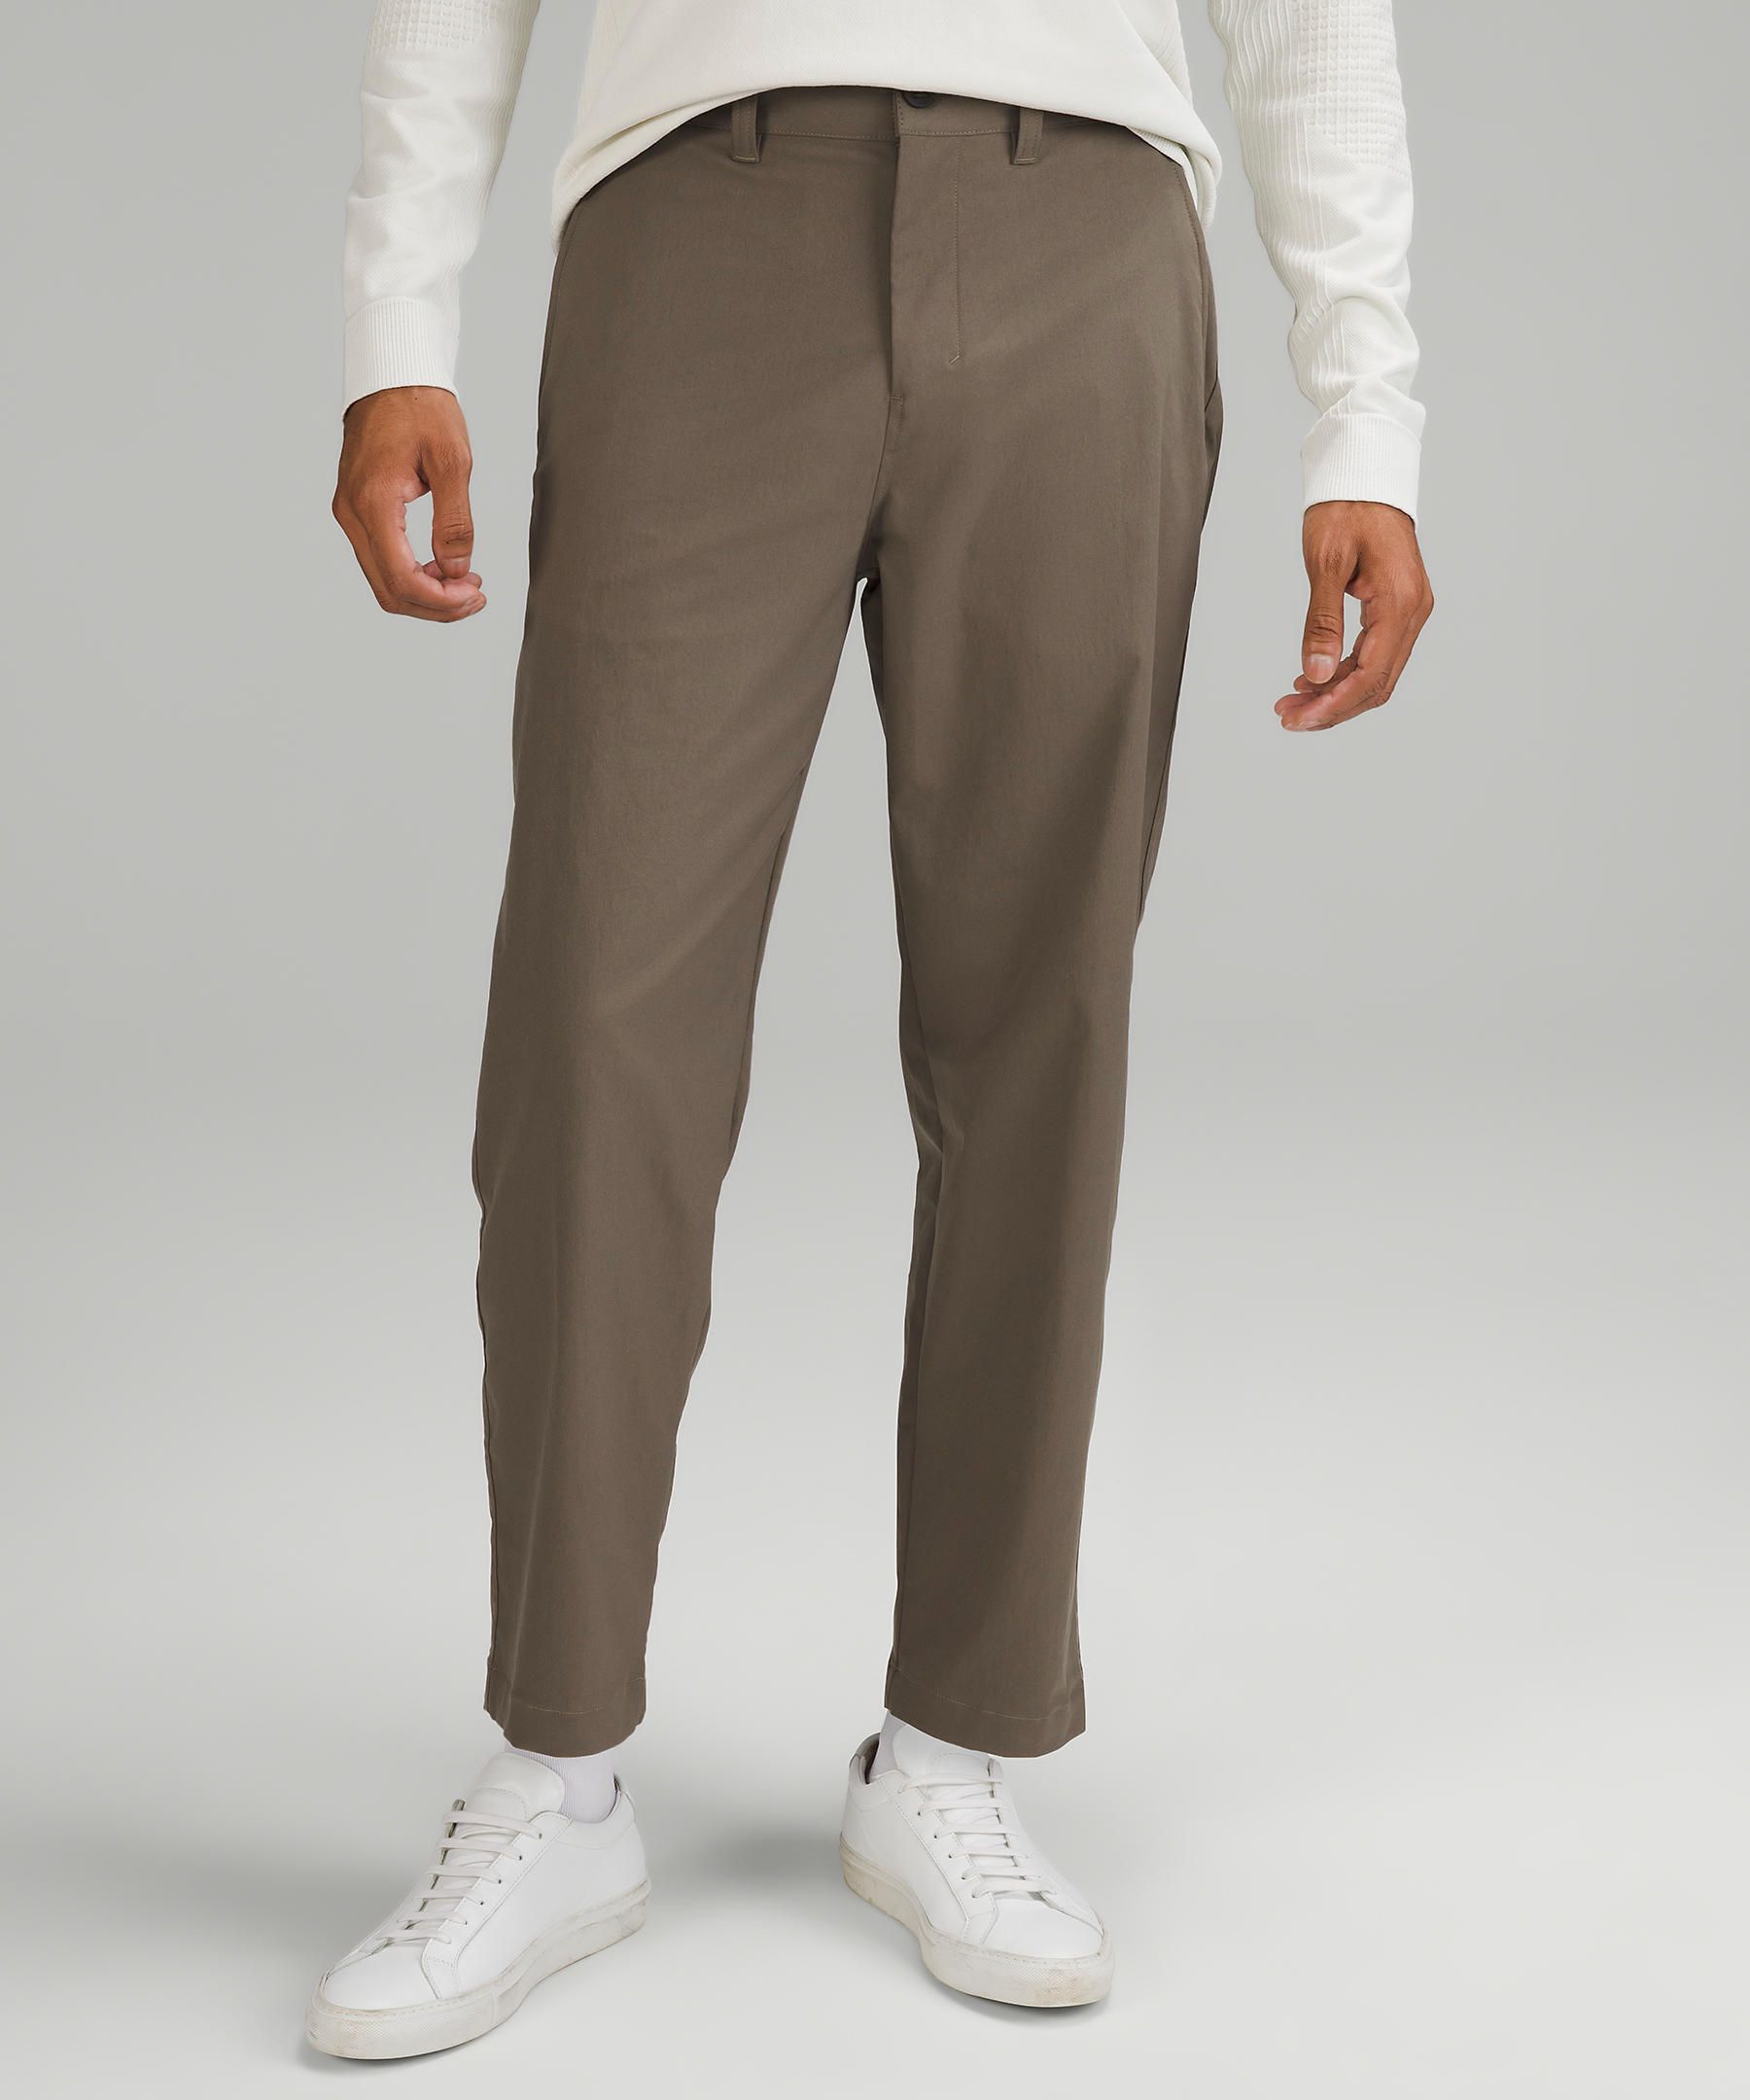 ABC SlimFit 5 Pocket Pant 37 Warpstreme  Mens Trousers  lululemon